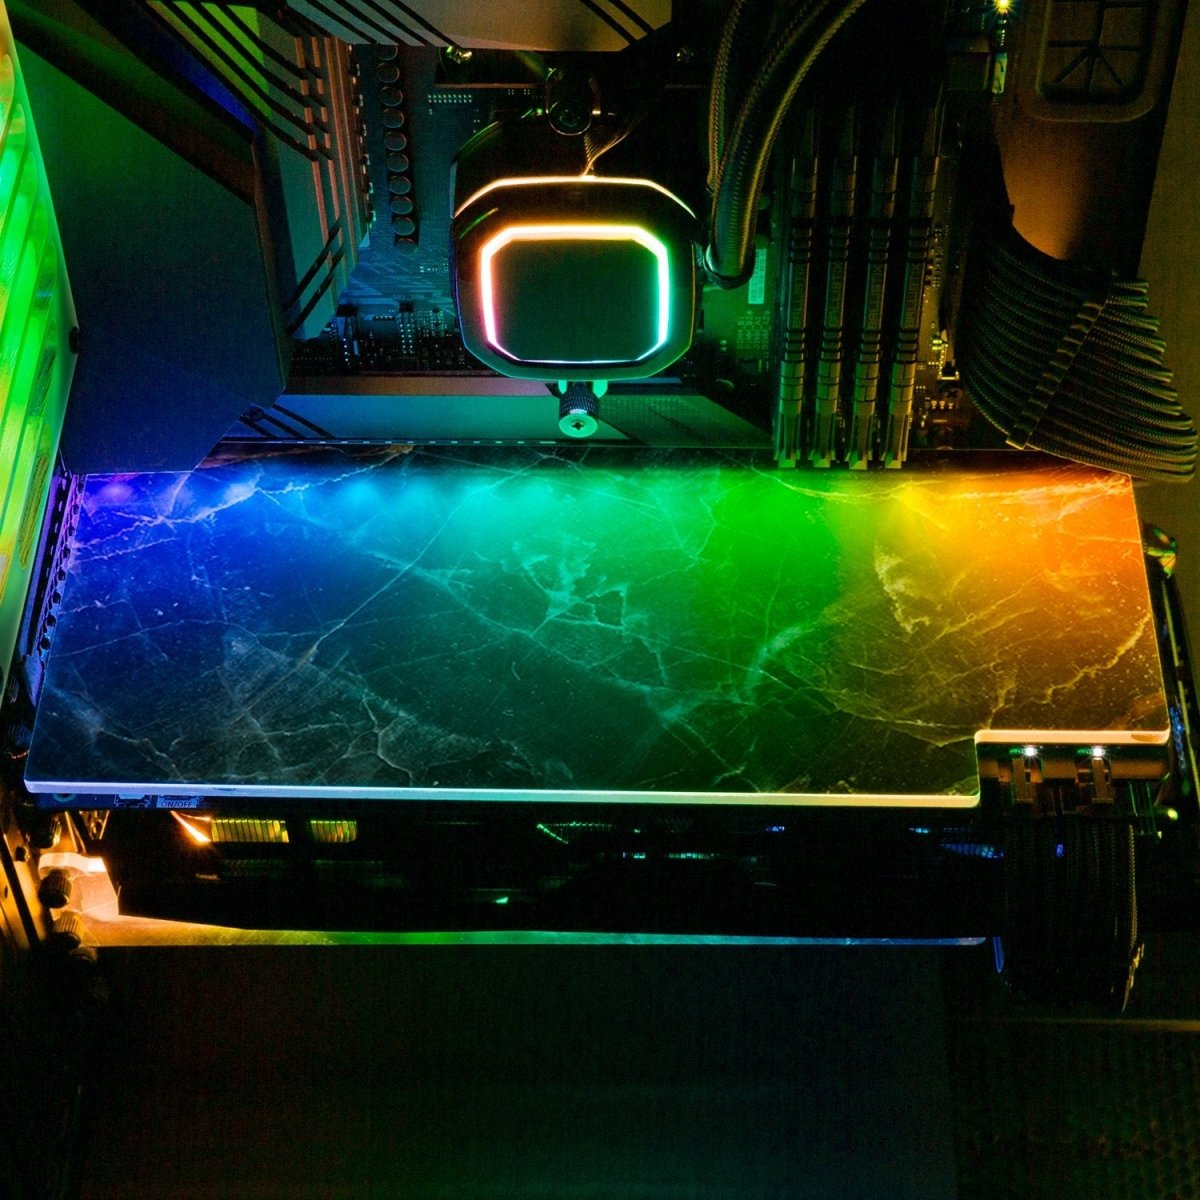 Night Marble RGB GPU Backplate - V1Tech